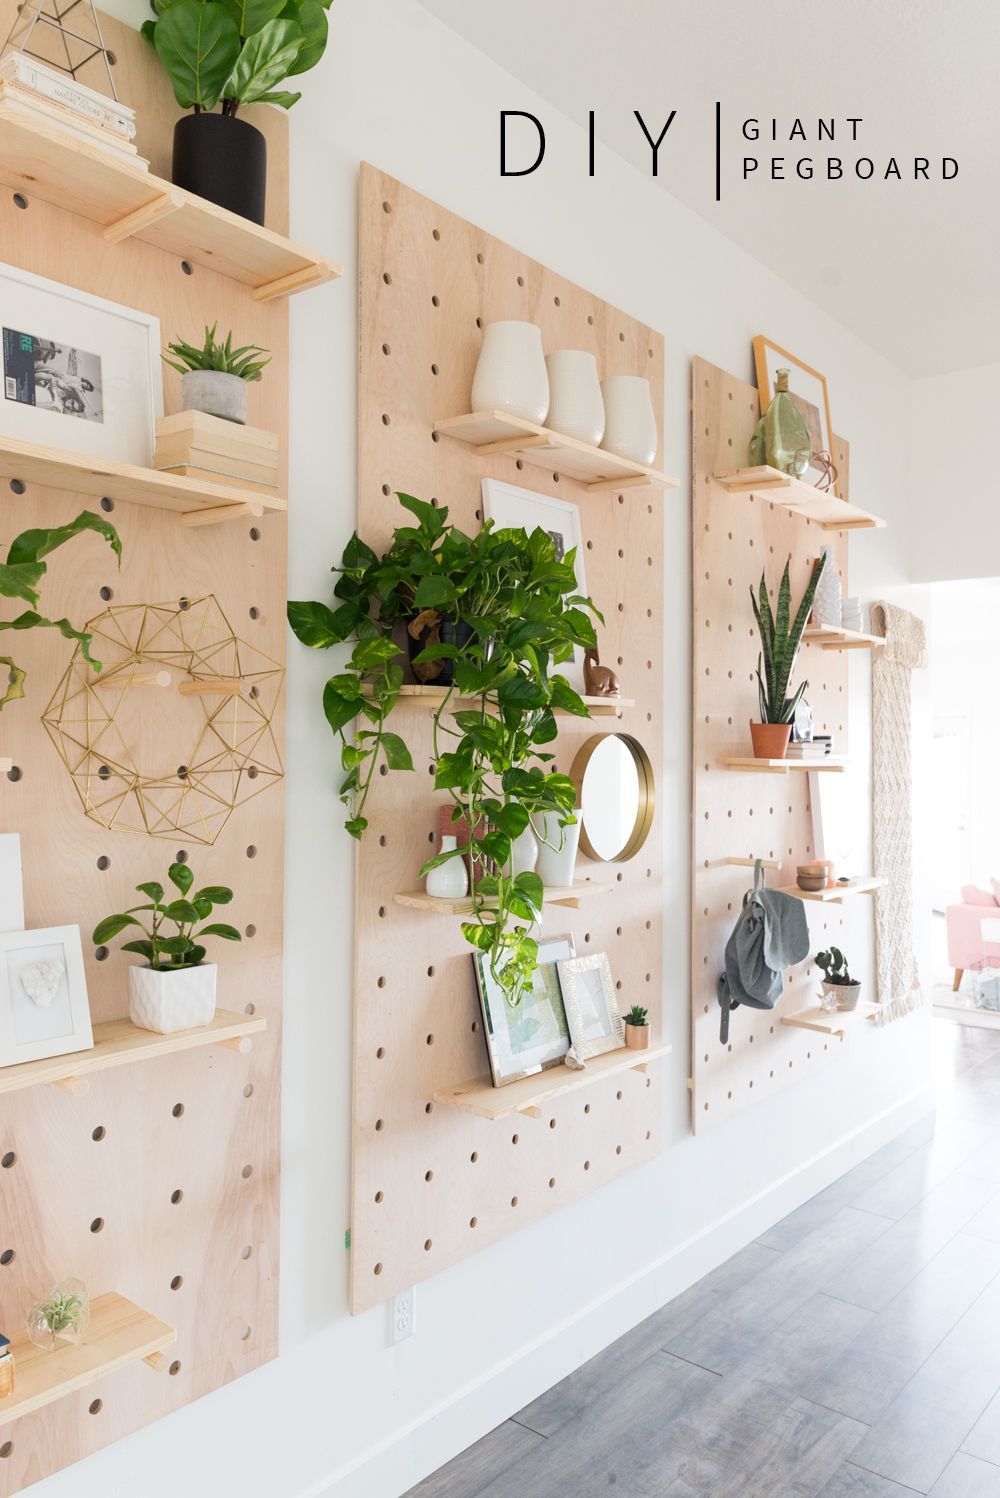 DIY Giant Pegboard | DIY Shelving Ideas | Modern Shelf Decor | How to Make Shelves for Big Spaces | Vintage Revivals